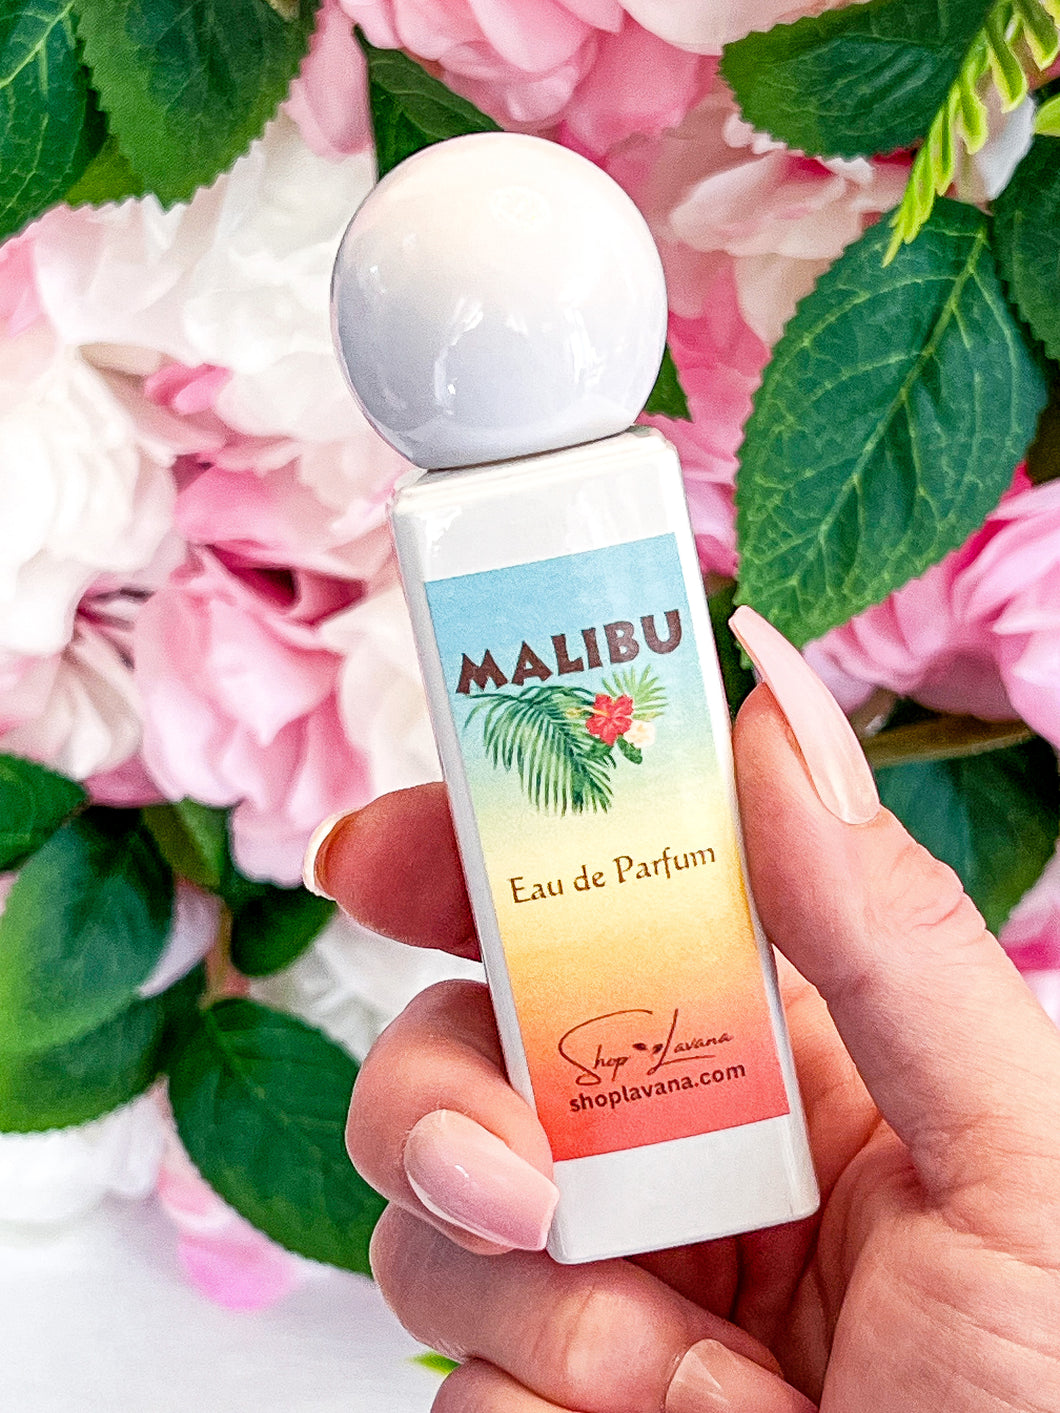 Malibu Eau de Parfum